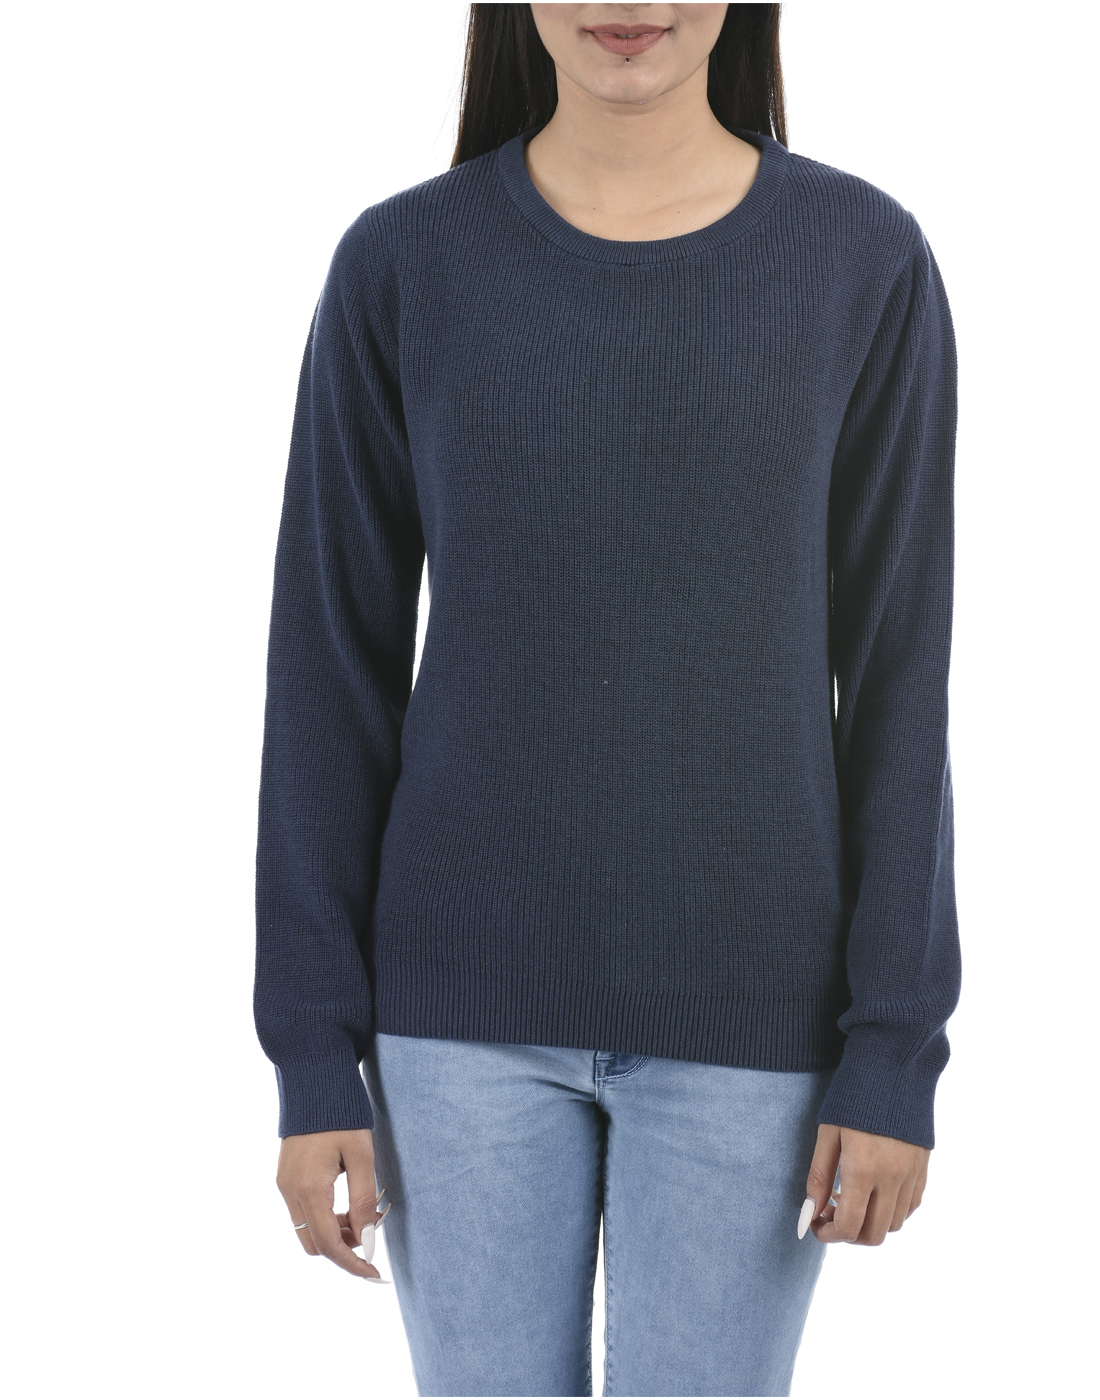 Portobello Wome Casual Wear Navy Blue Sweater